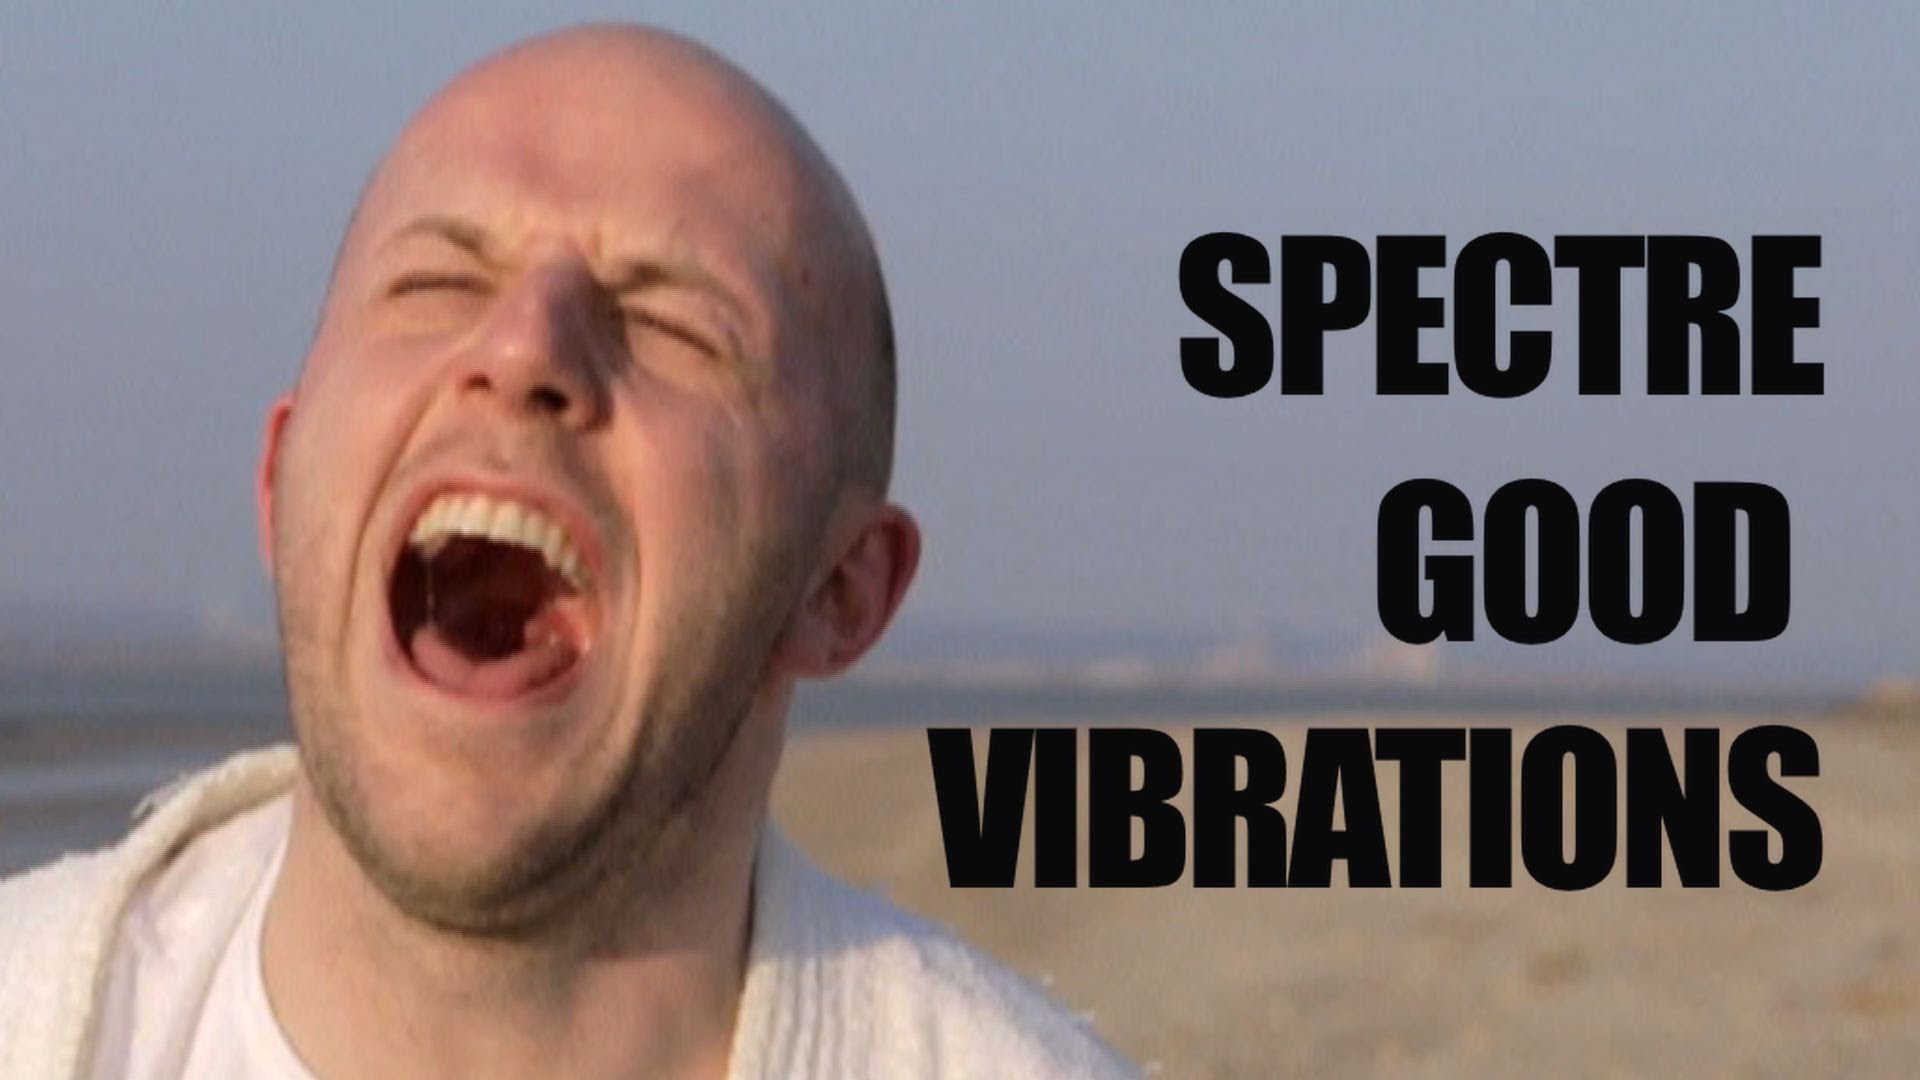 The Spectre “Good Vibrations” [VIDEO]